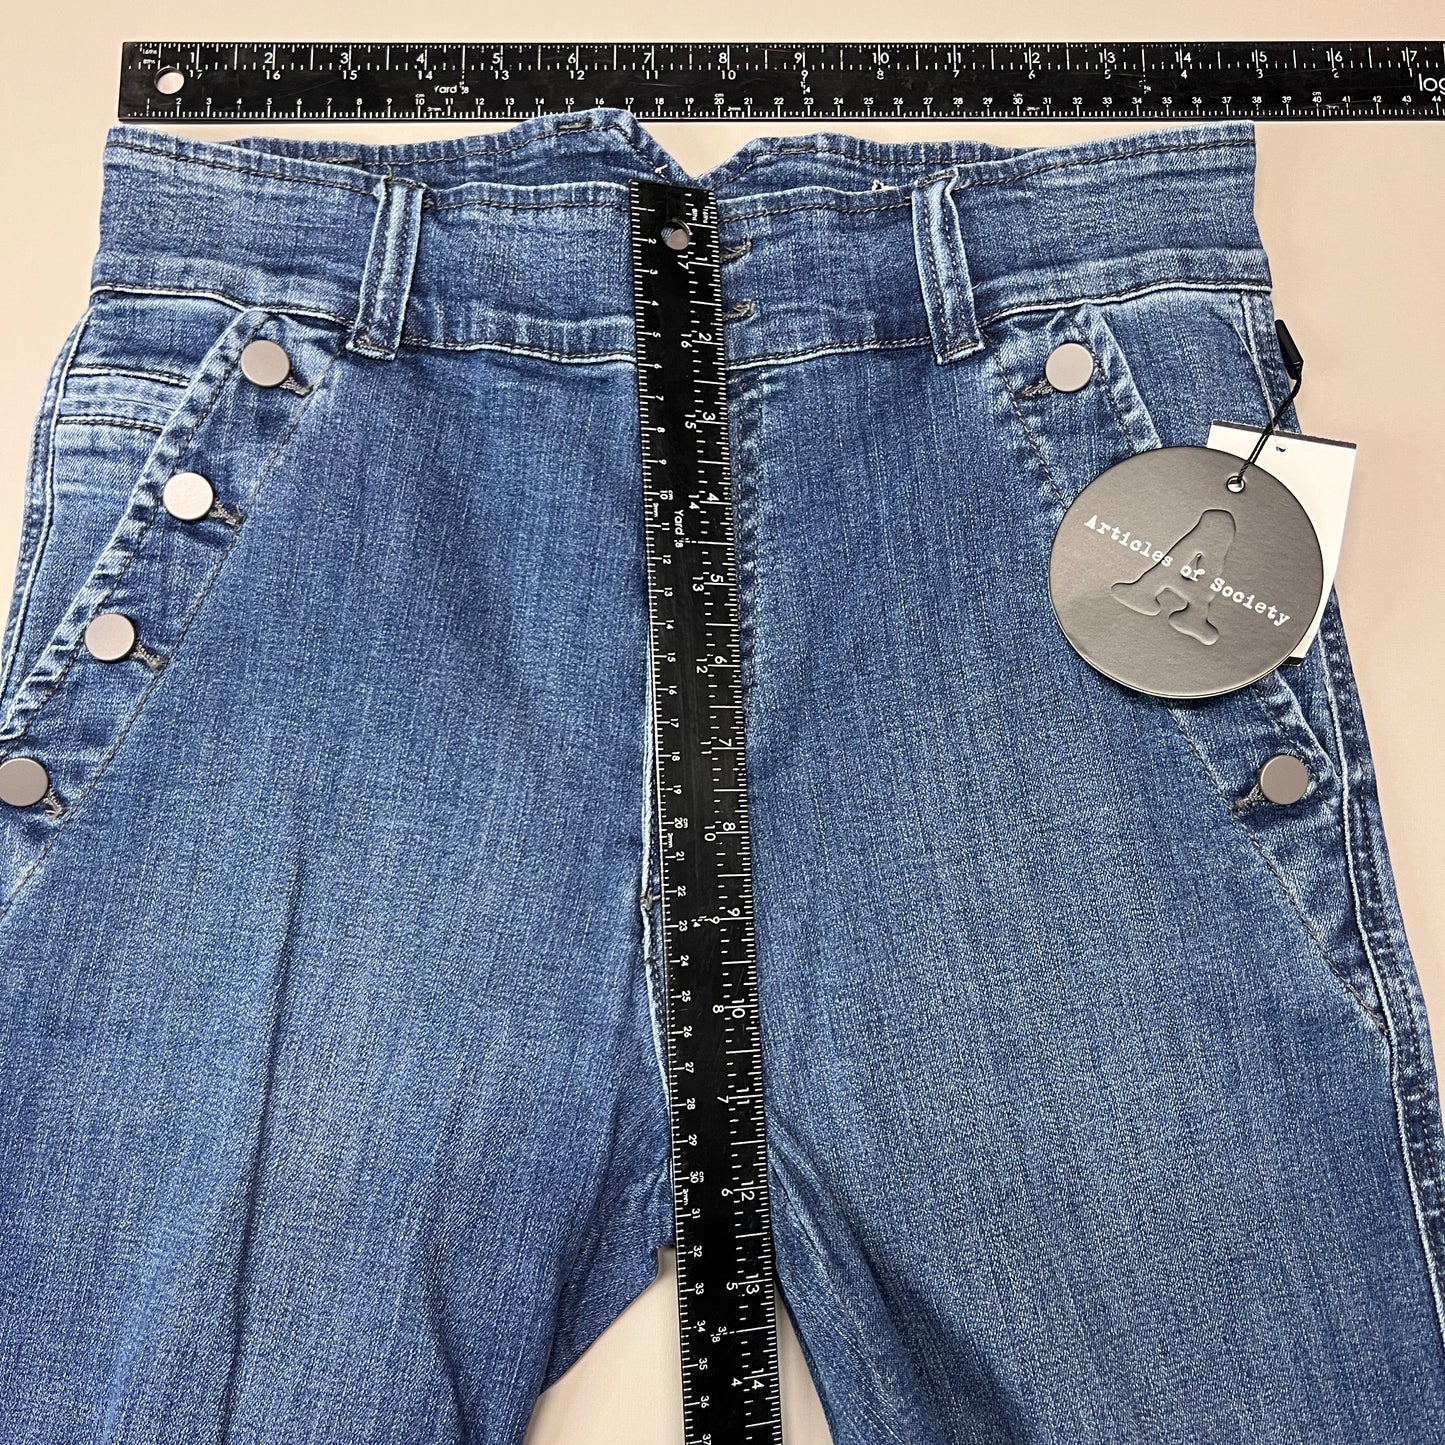 ARTICLES OF SOCIETY Village Park Denim Jeans Women's Sz 31 Blue 4488PLV-731 (New)